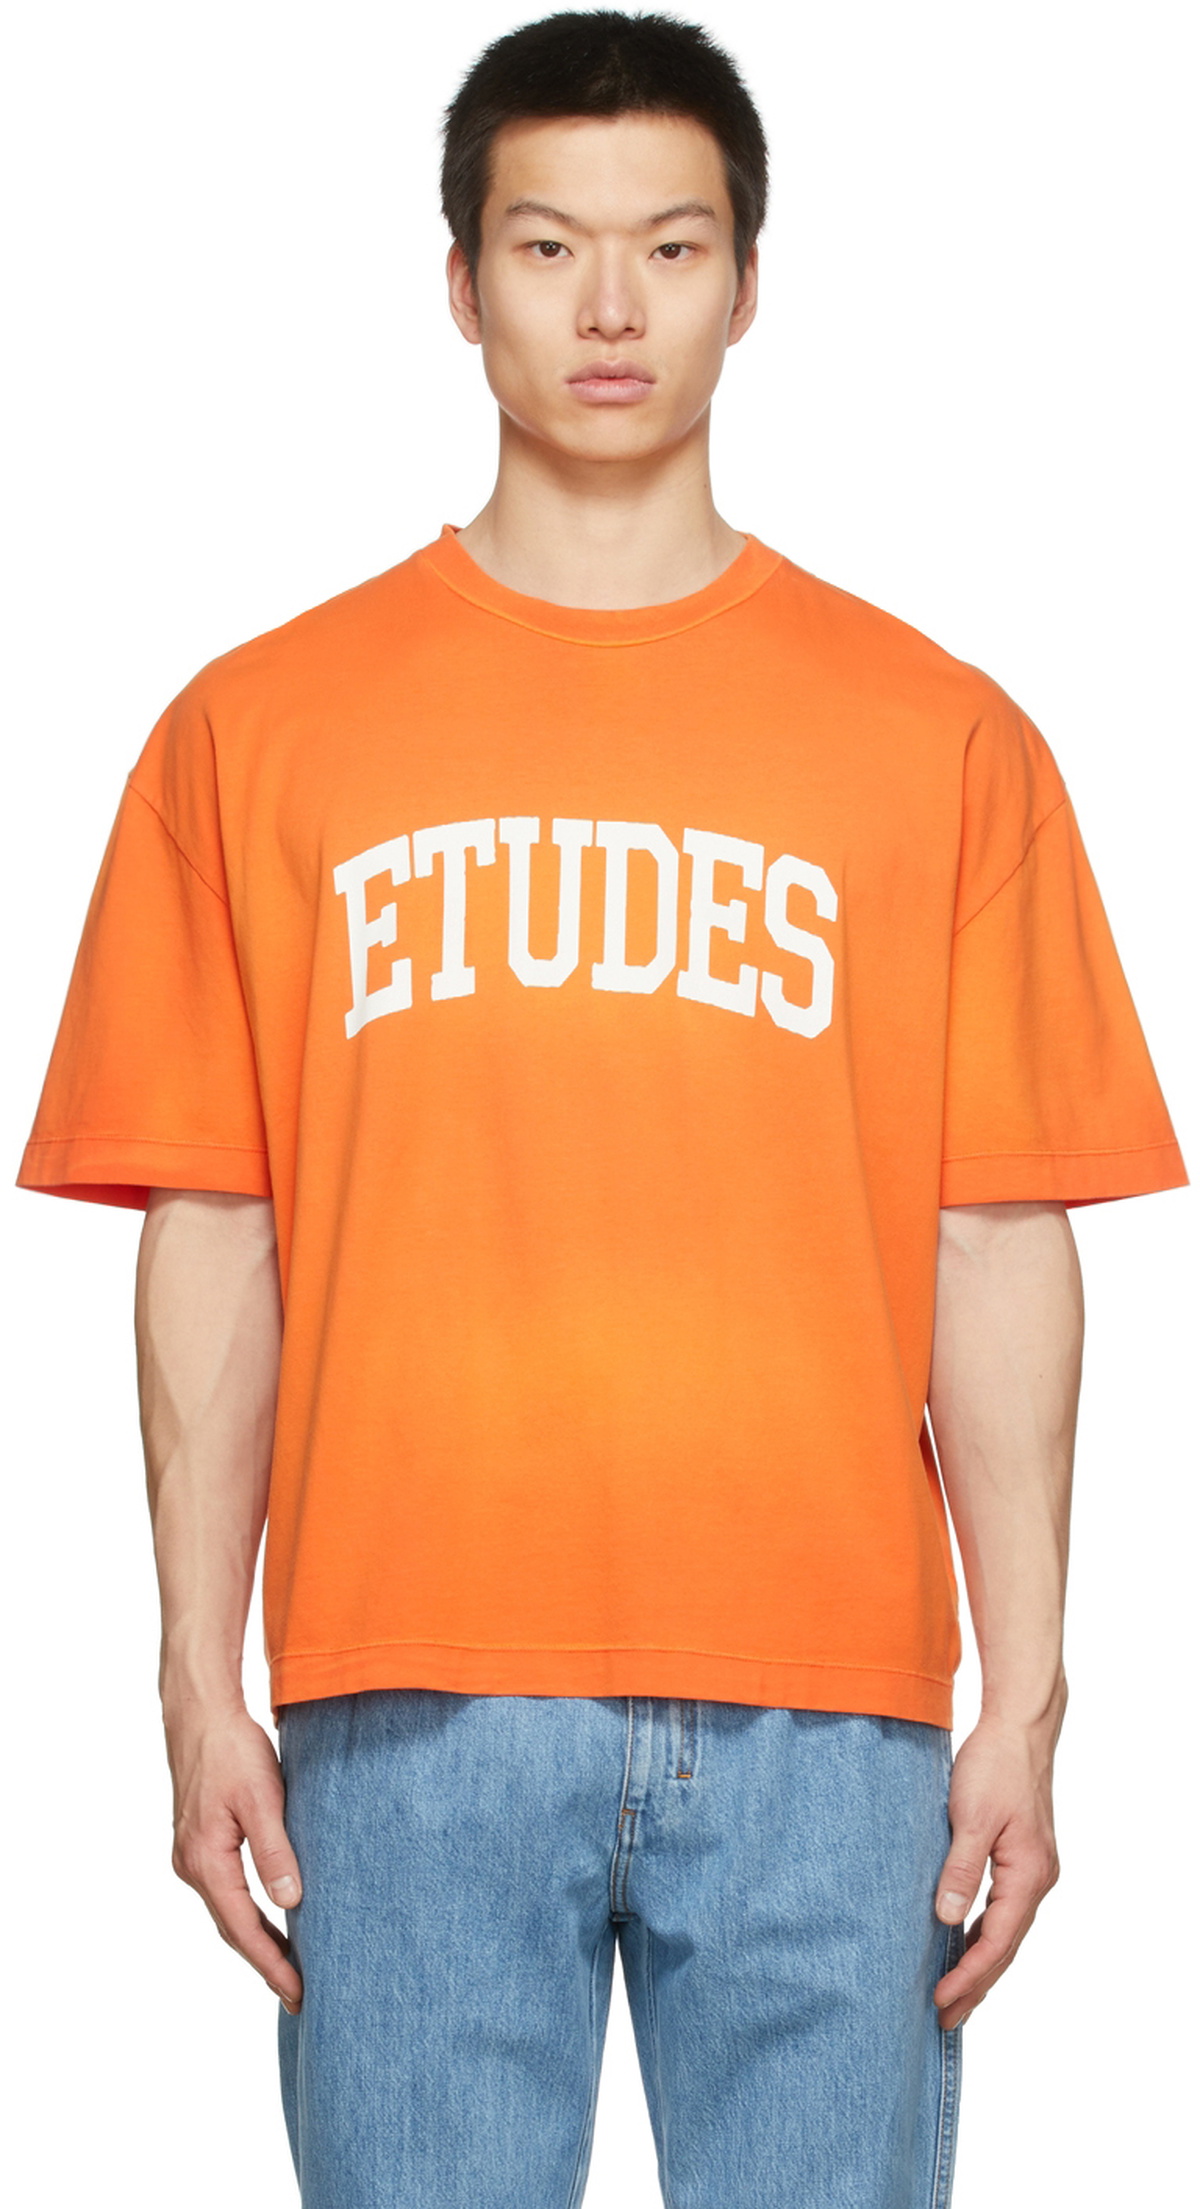 Études Orange Spirit 'Études' University T-Shirt Etudes